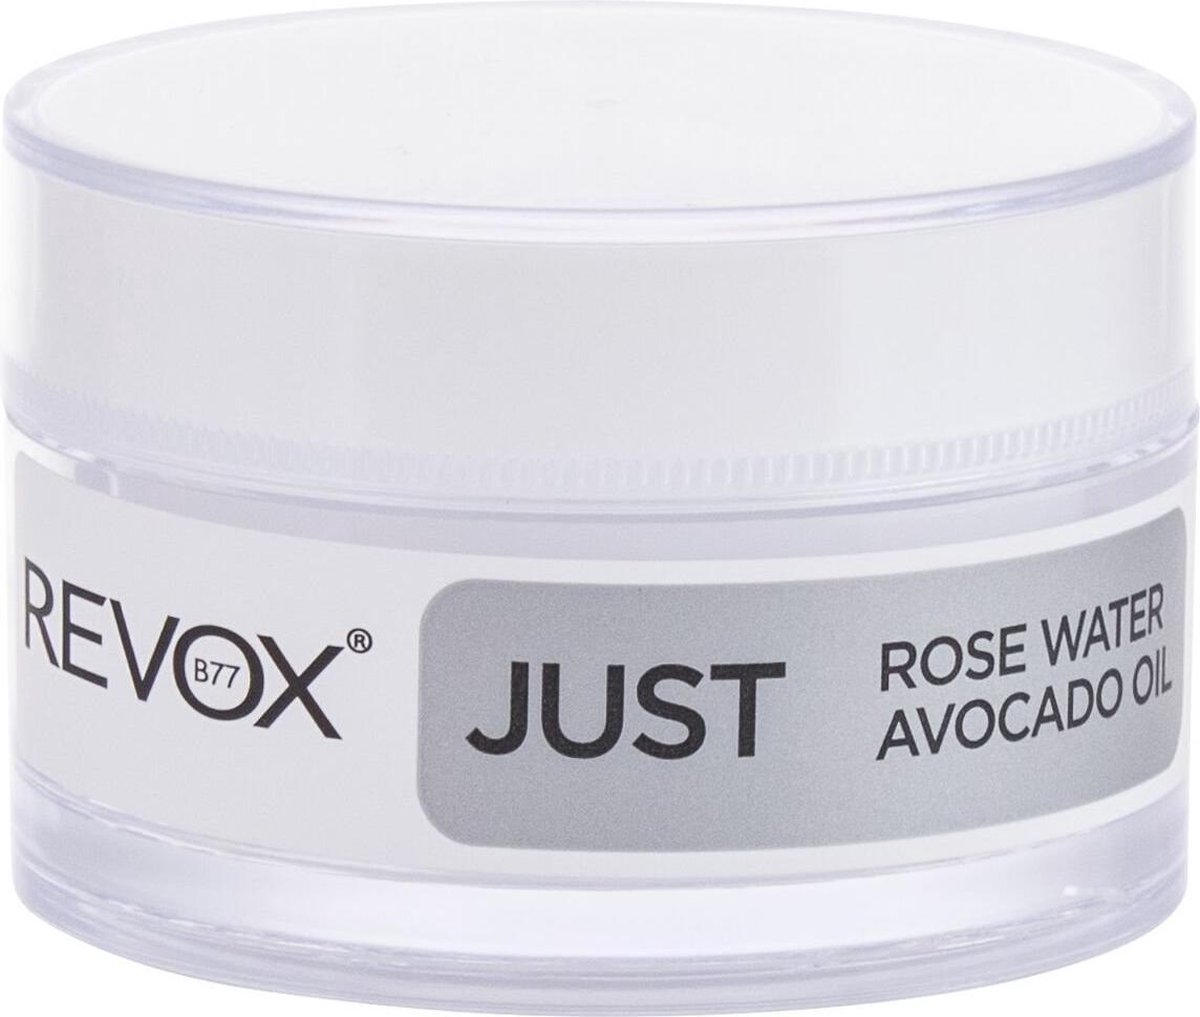 Revox Just Rose Water Avocado Oil Eye Care Cream 50ml.